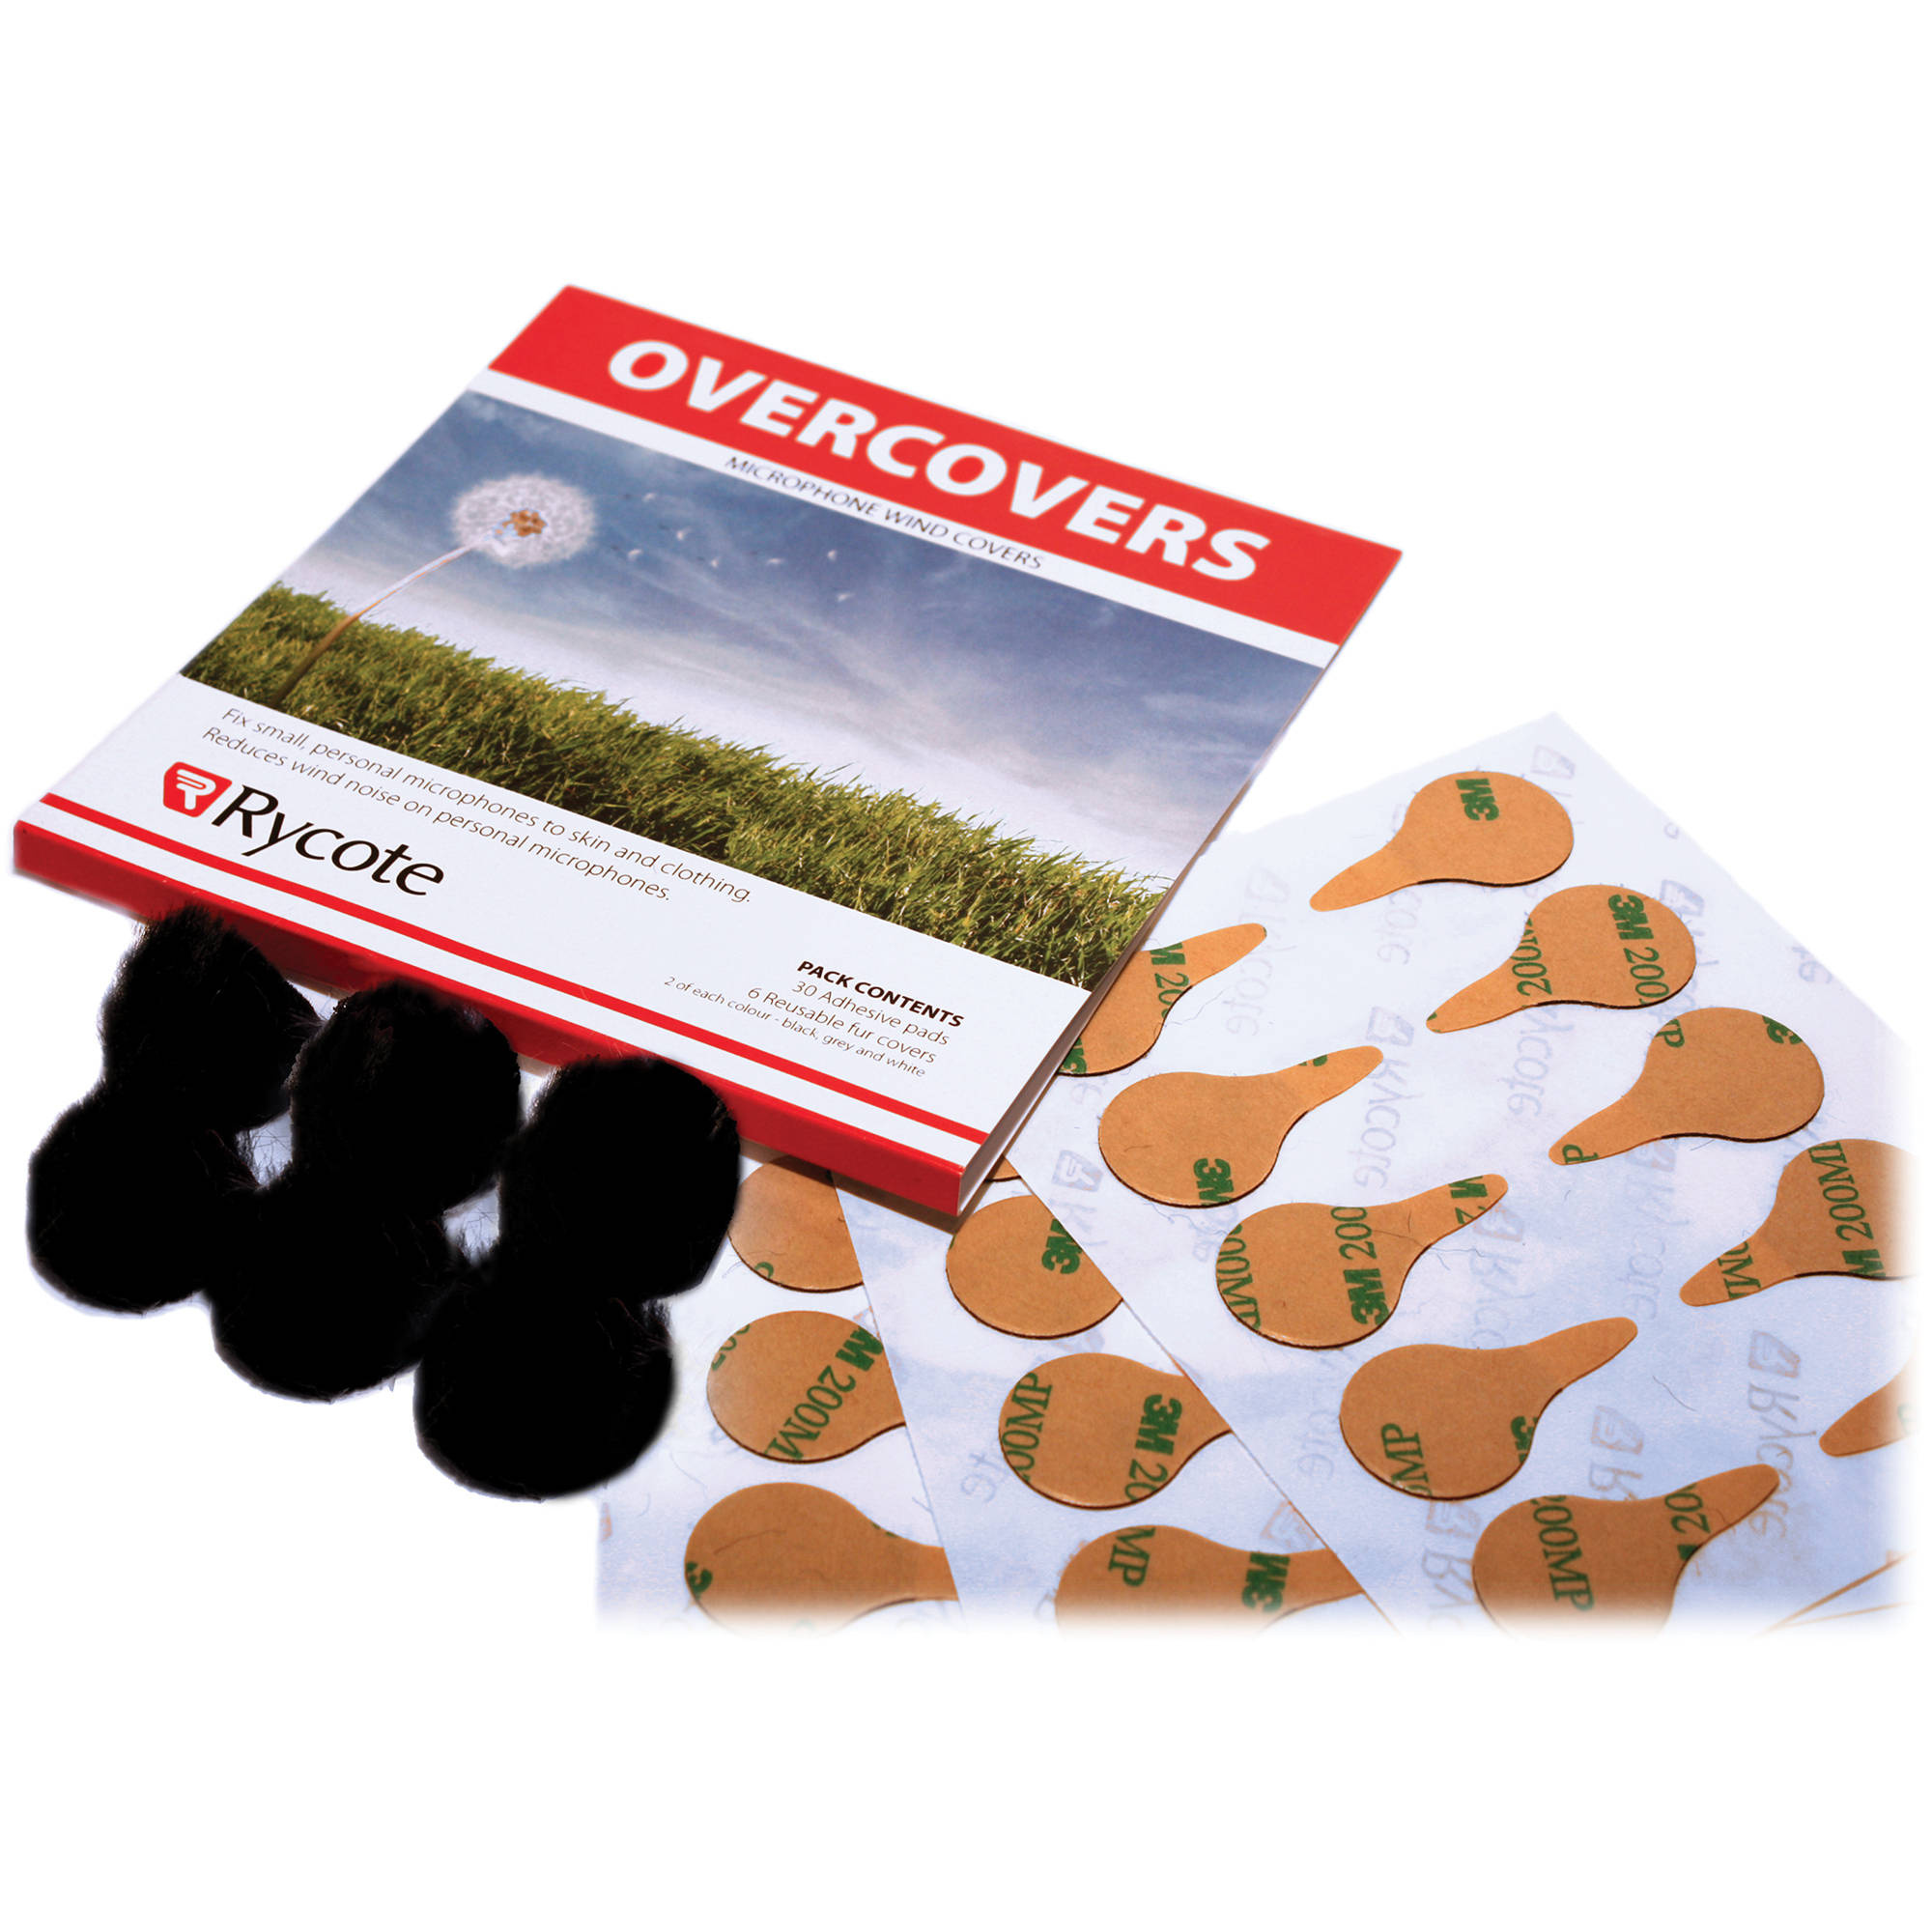 Rycote Overcovers (Black) -  6-Pack, 30 Stickies